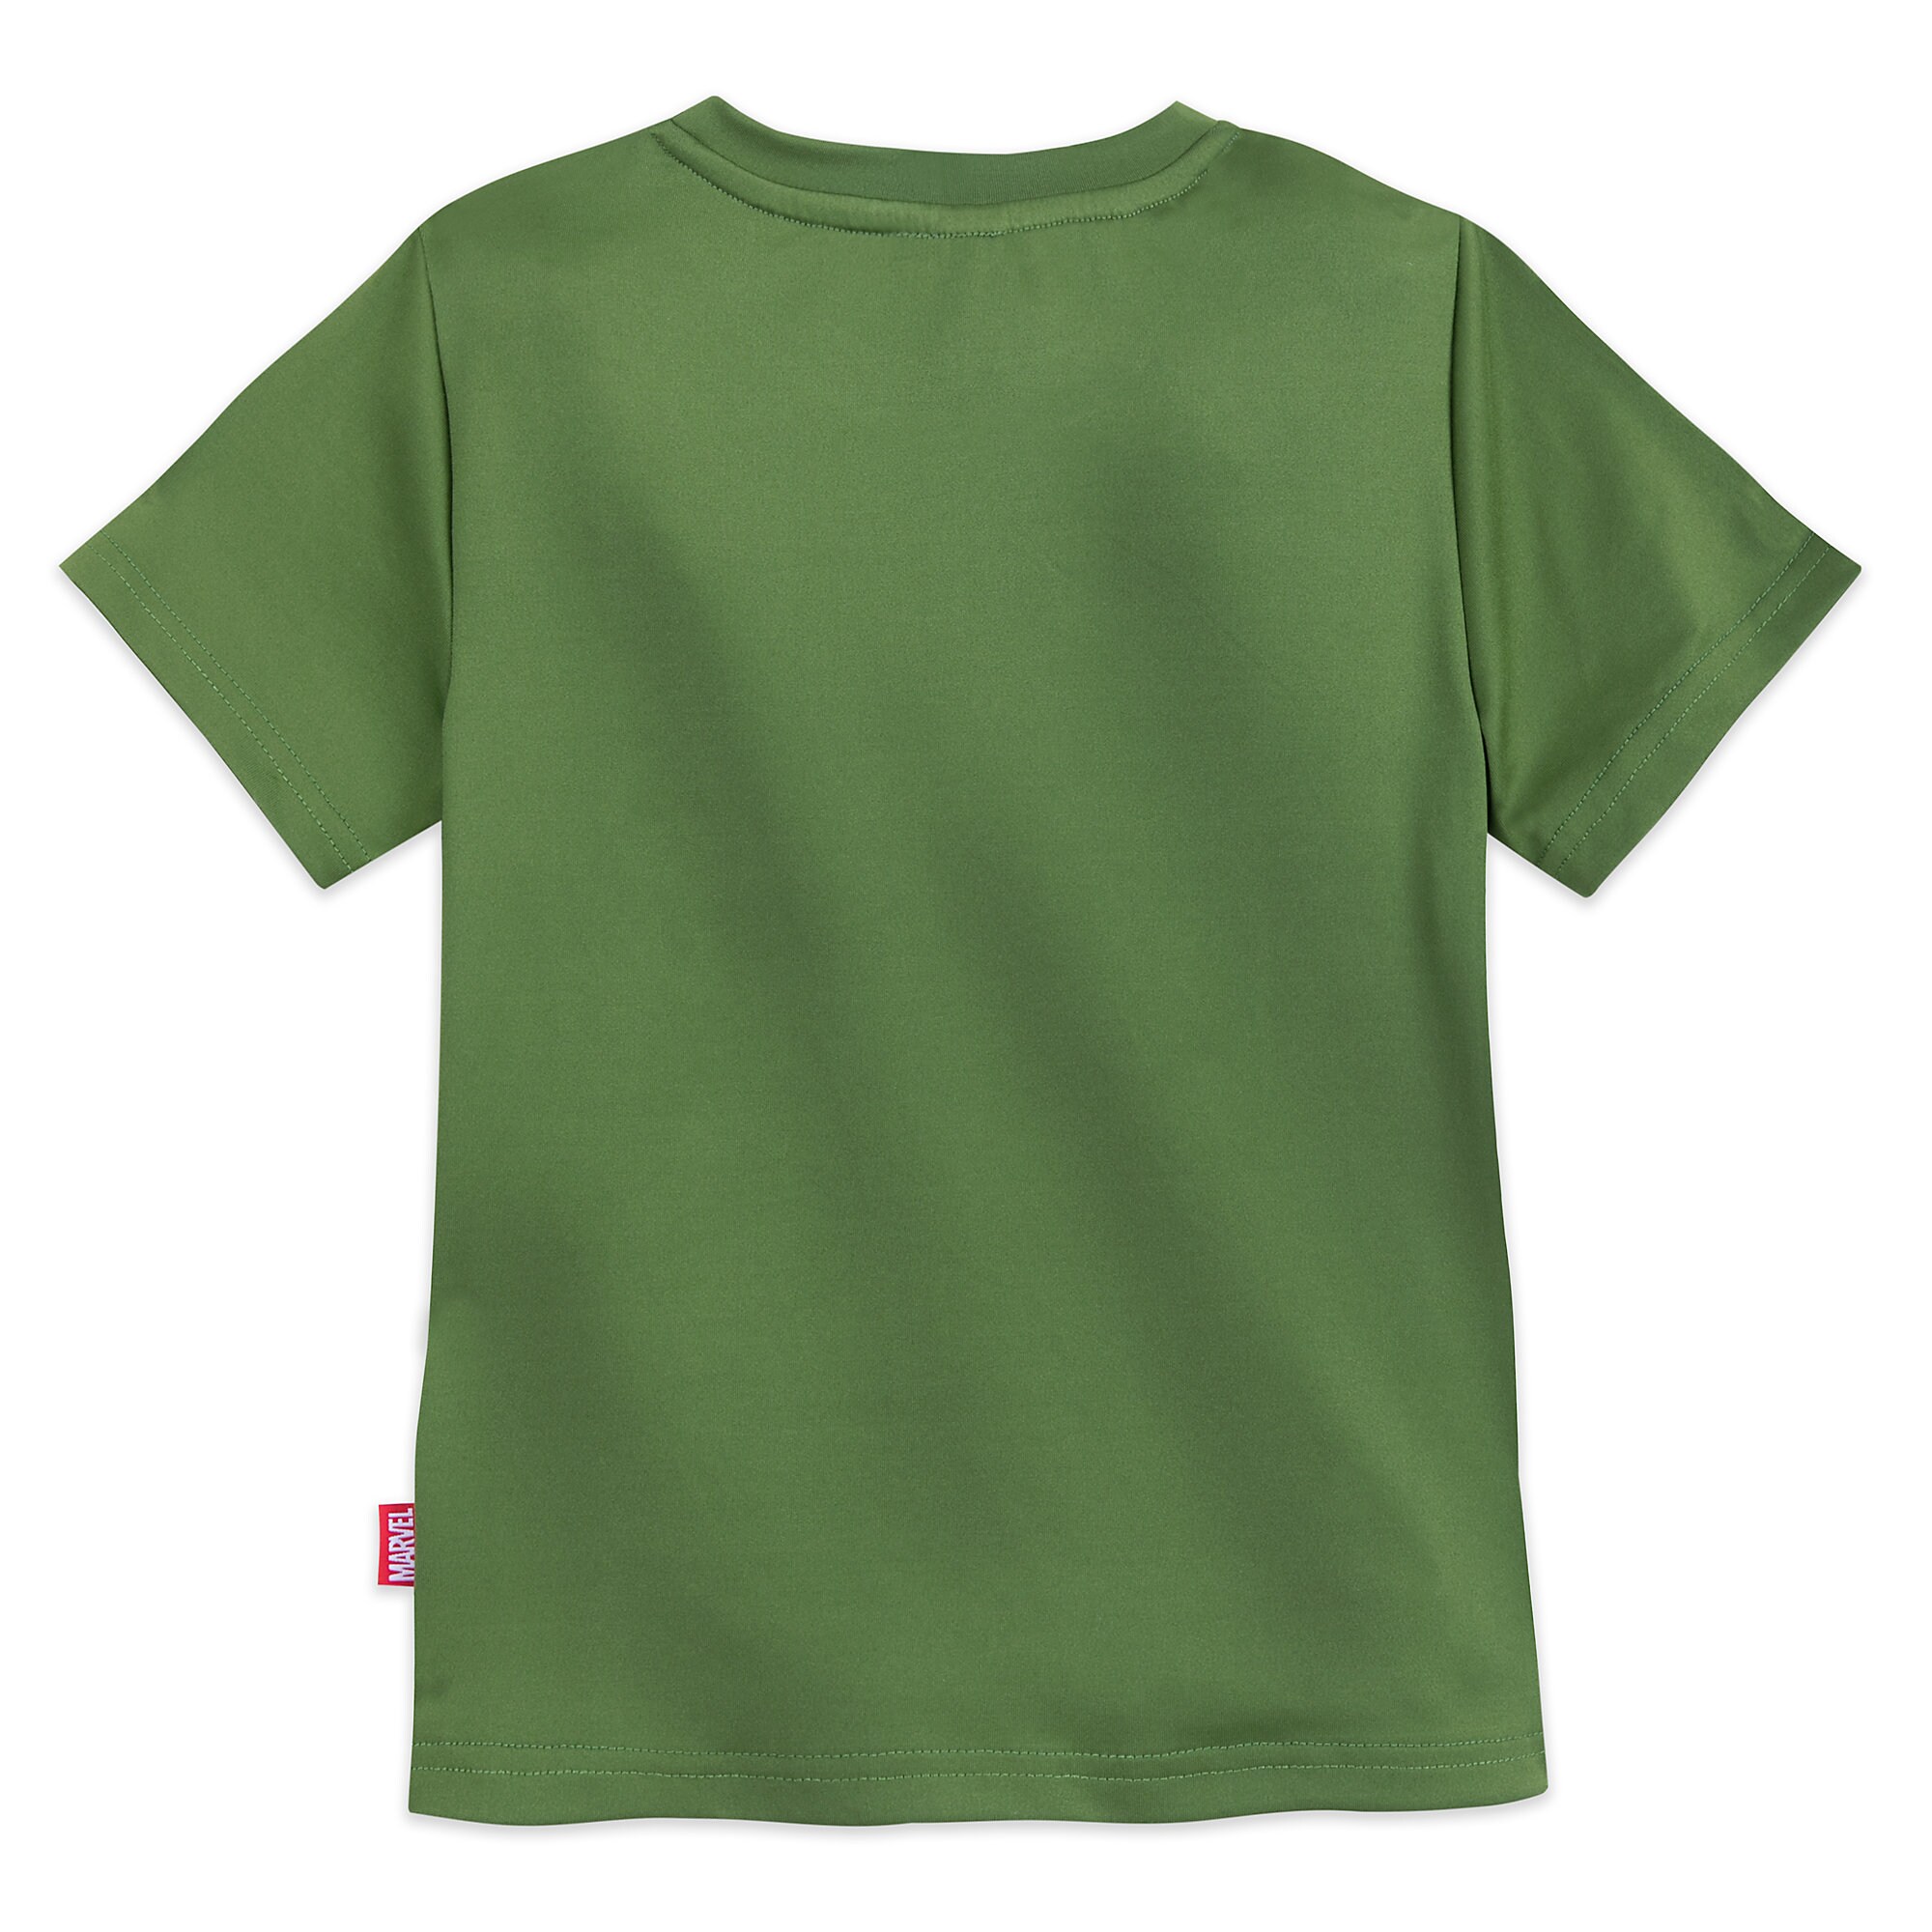 Hulk T-Shirt and Shorts Set for Boys